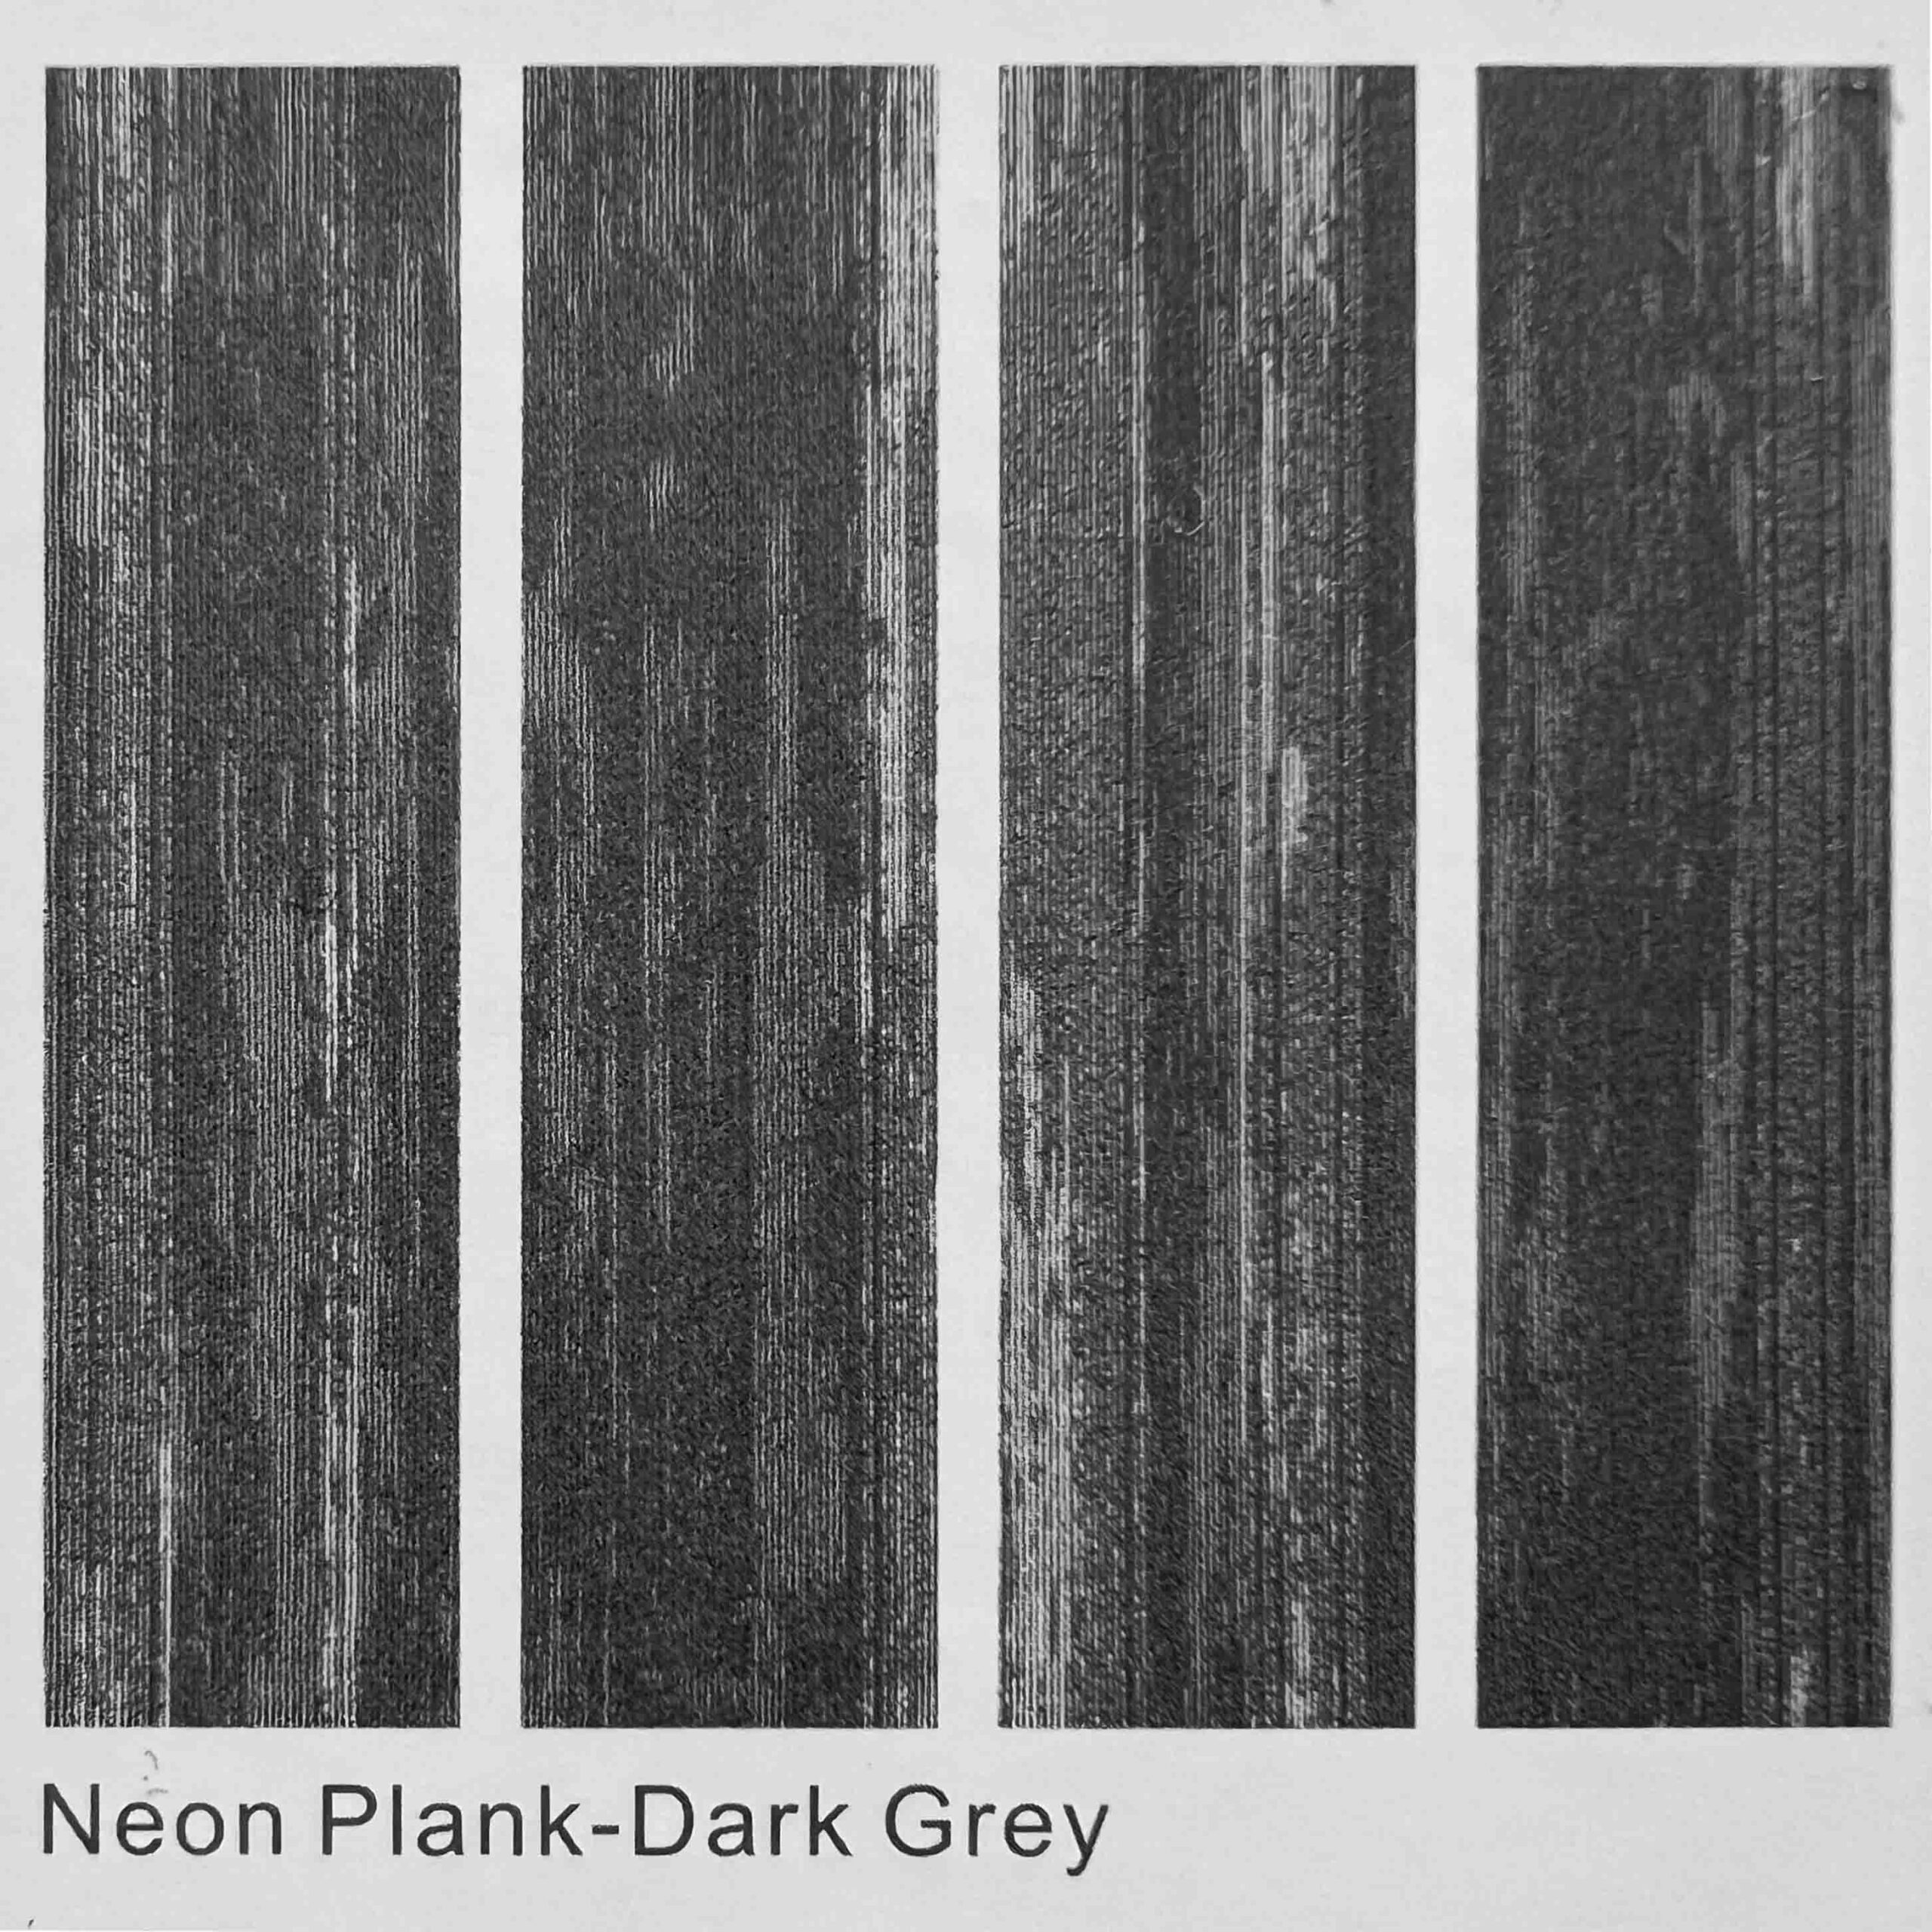 NEON PLANK-DARK GREY